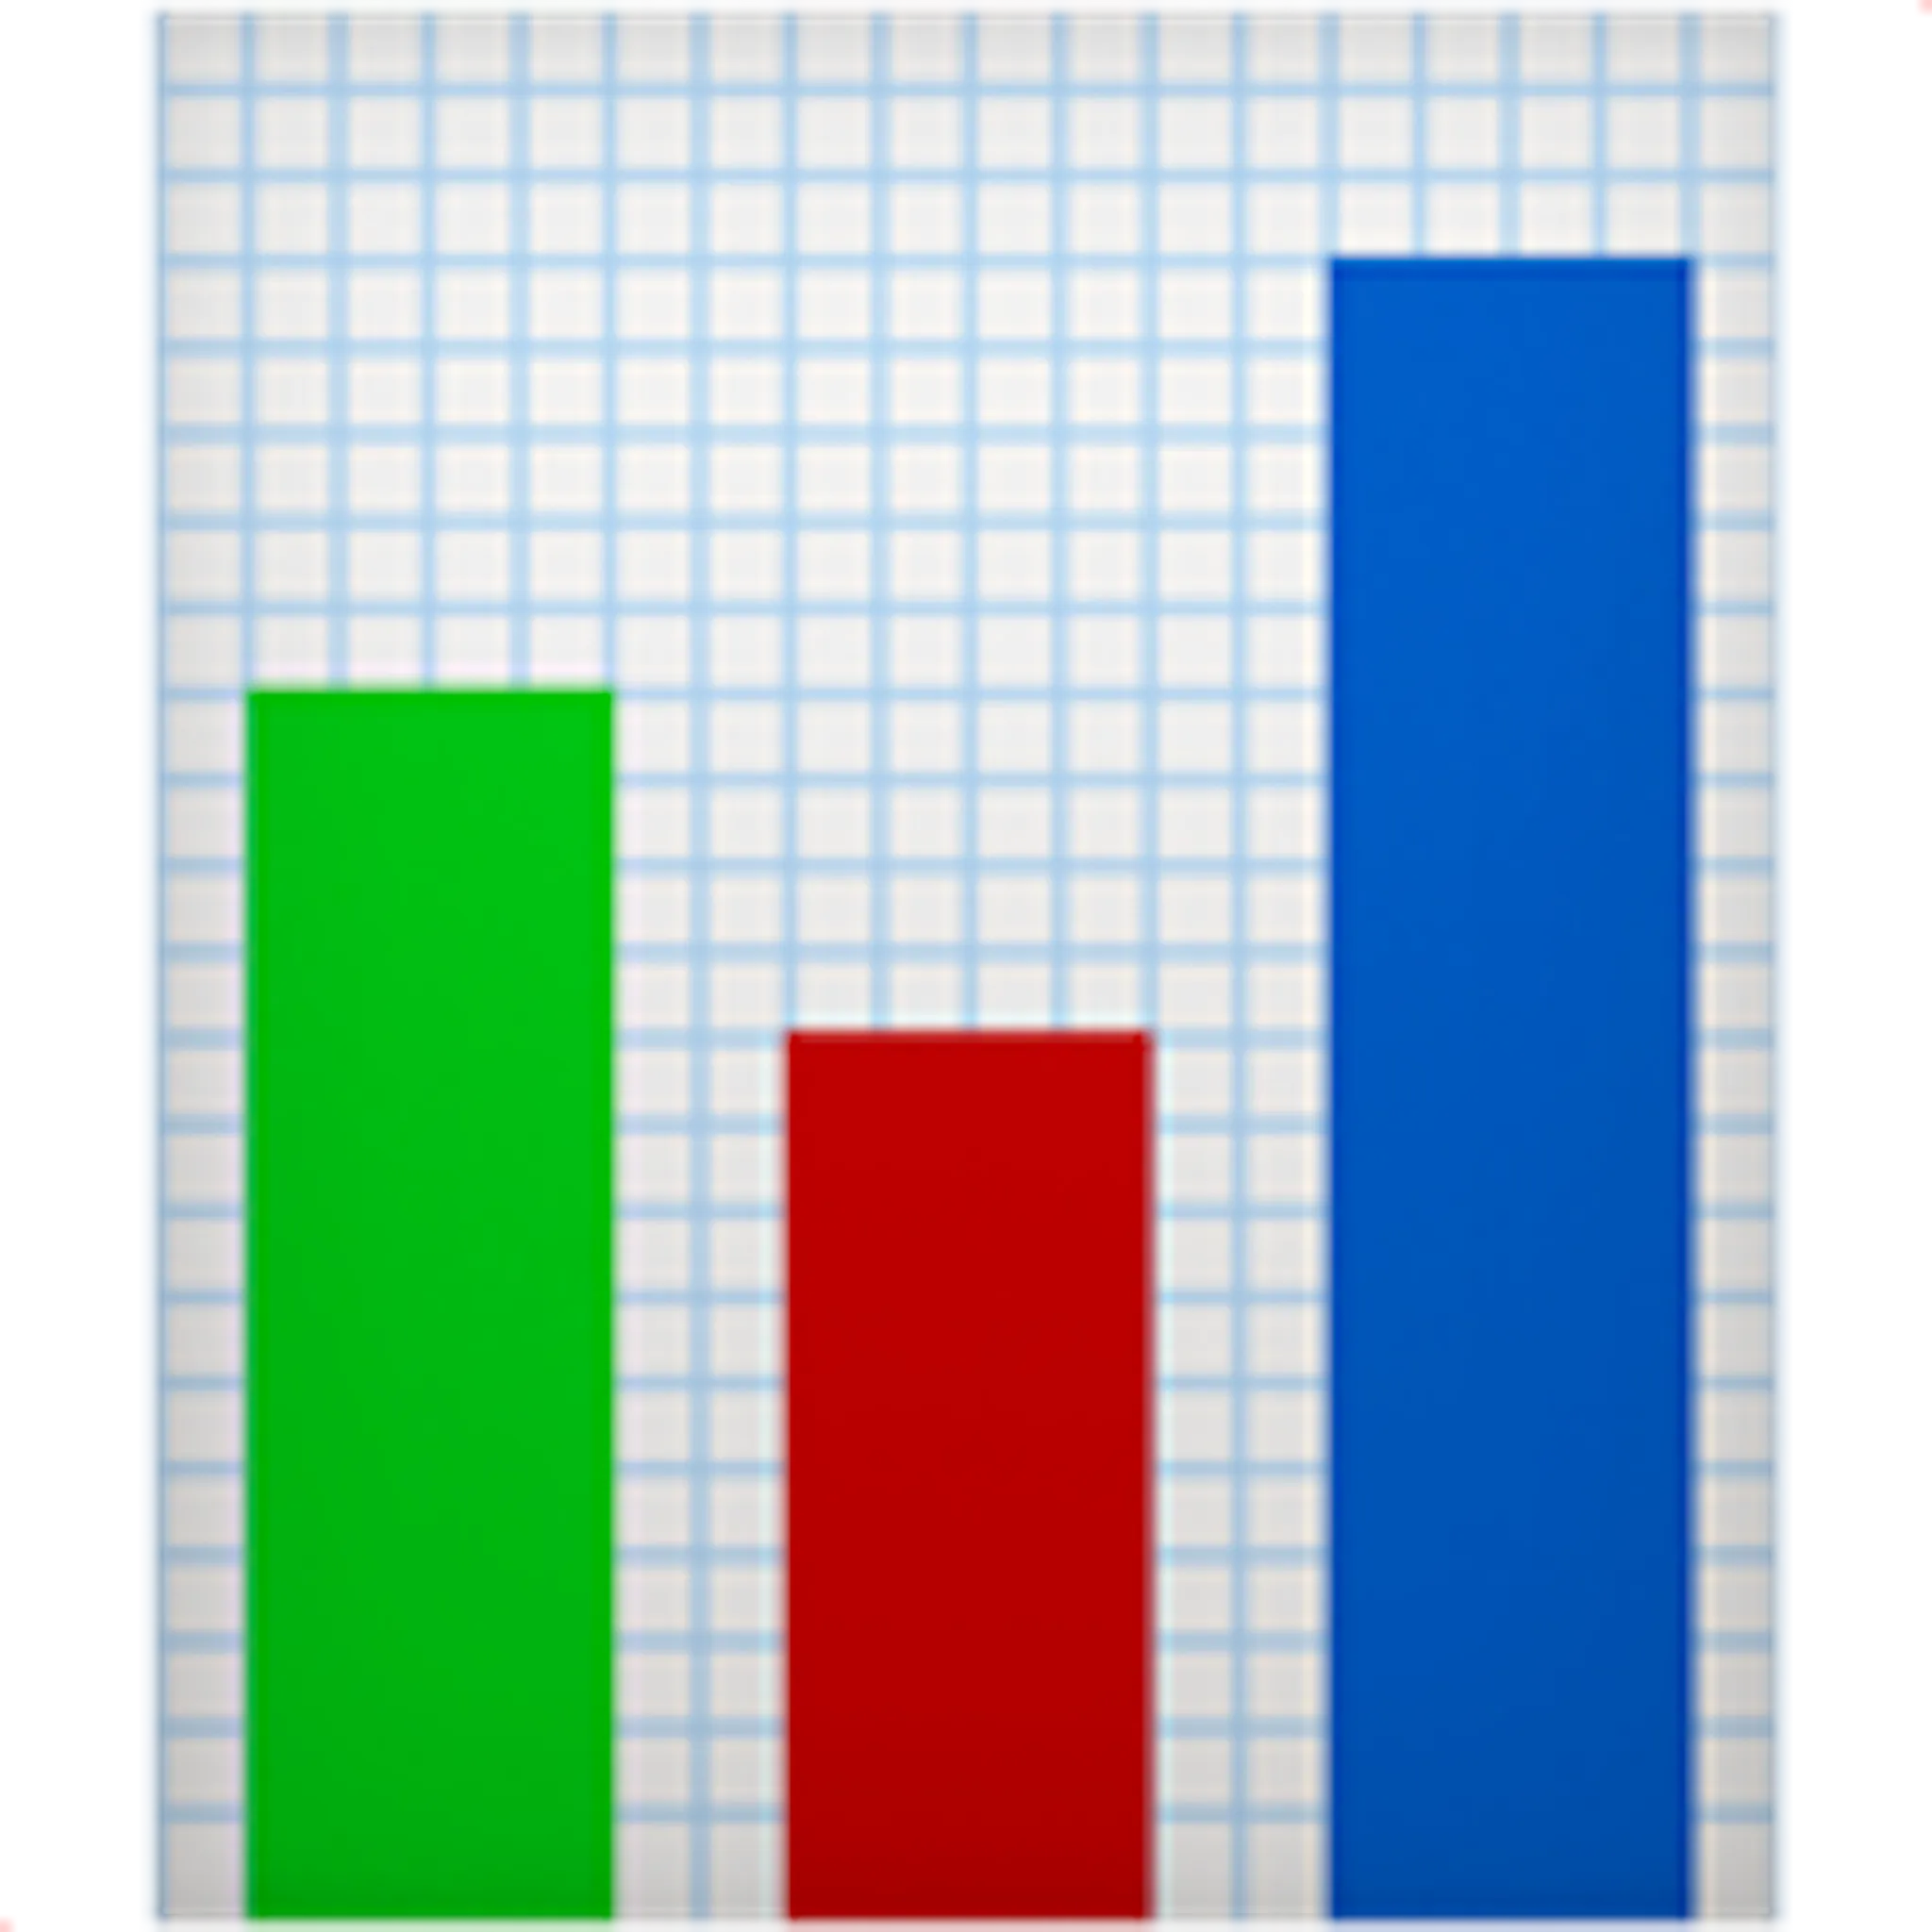 📊 Bar Chart Emoji Copy Paste 📊